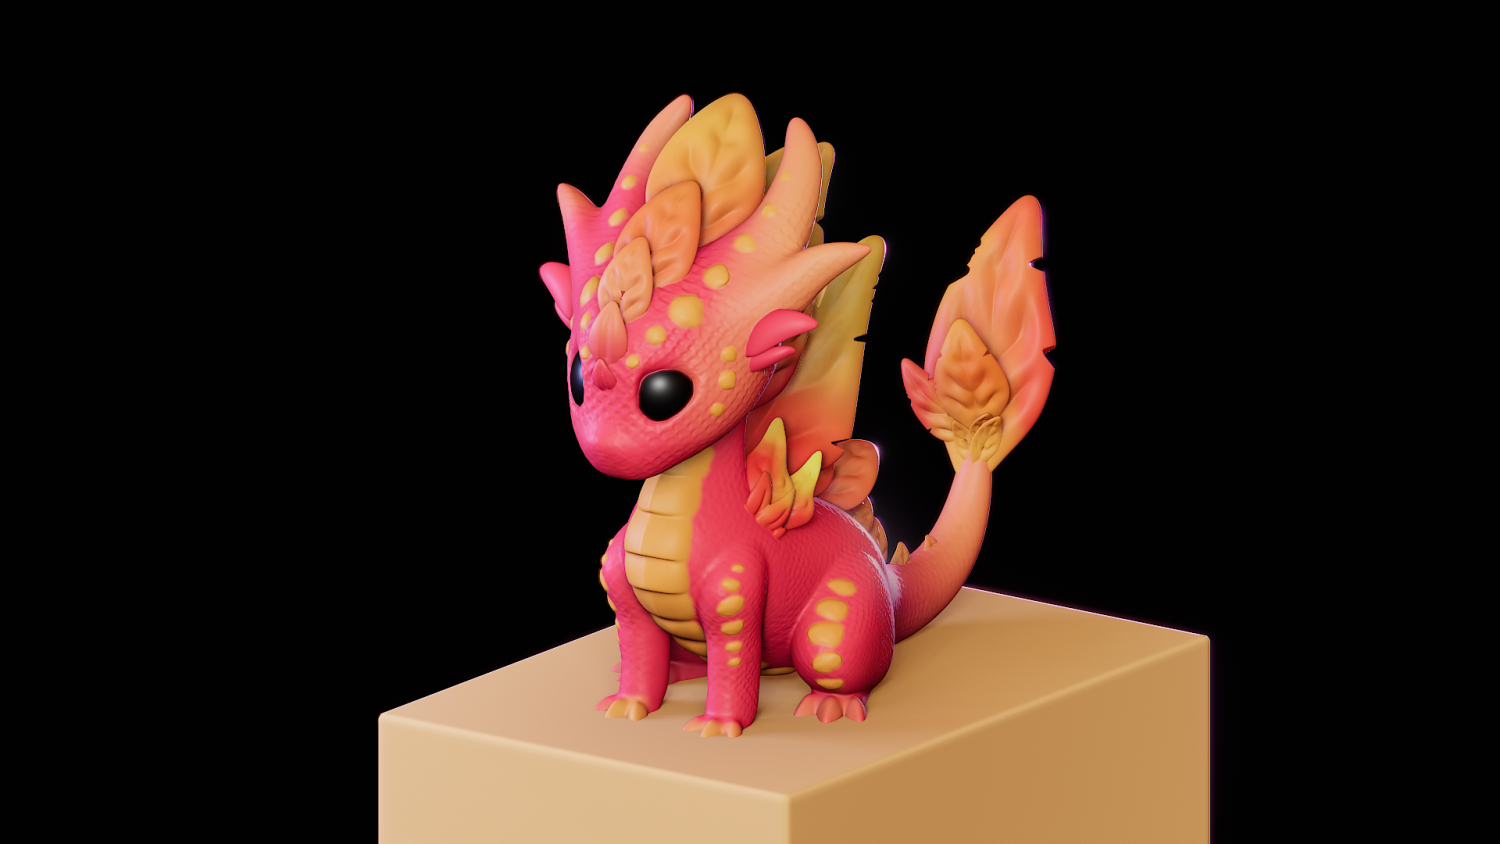 Chinese dragon 3D Model $69 - .obj .max .fbx - Free3D